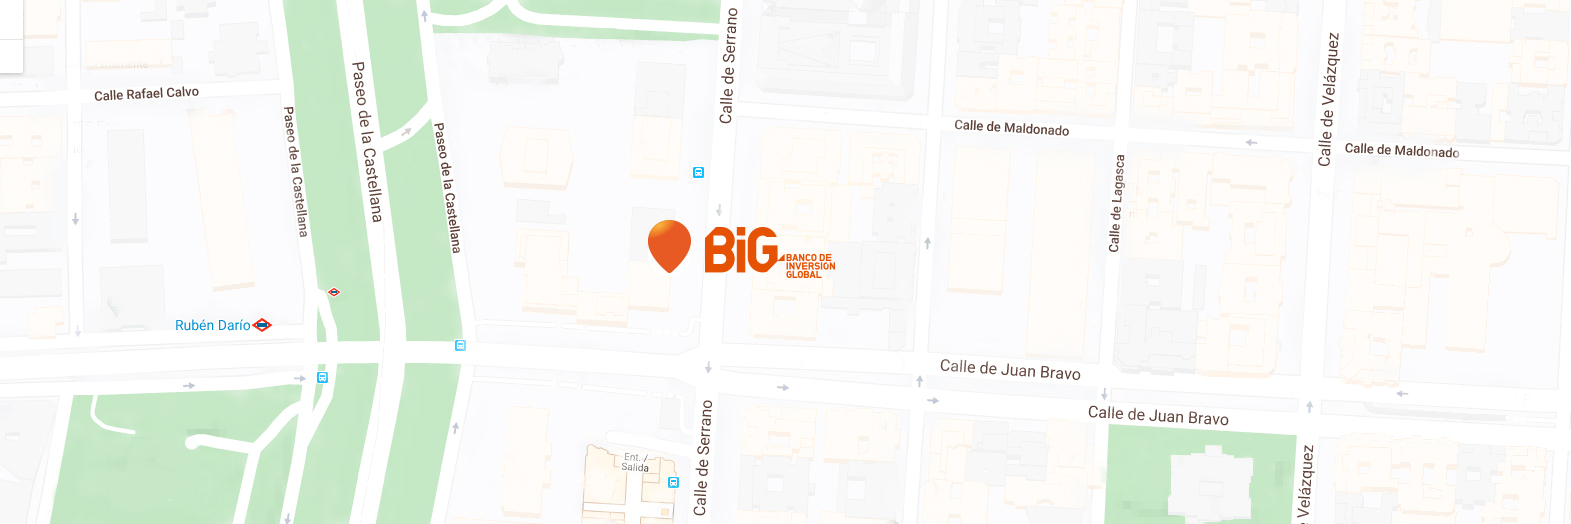 Maps Big Madrid V4